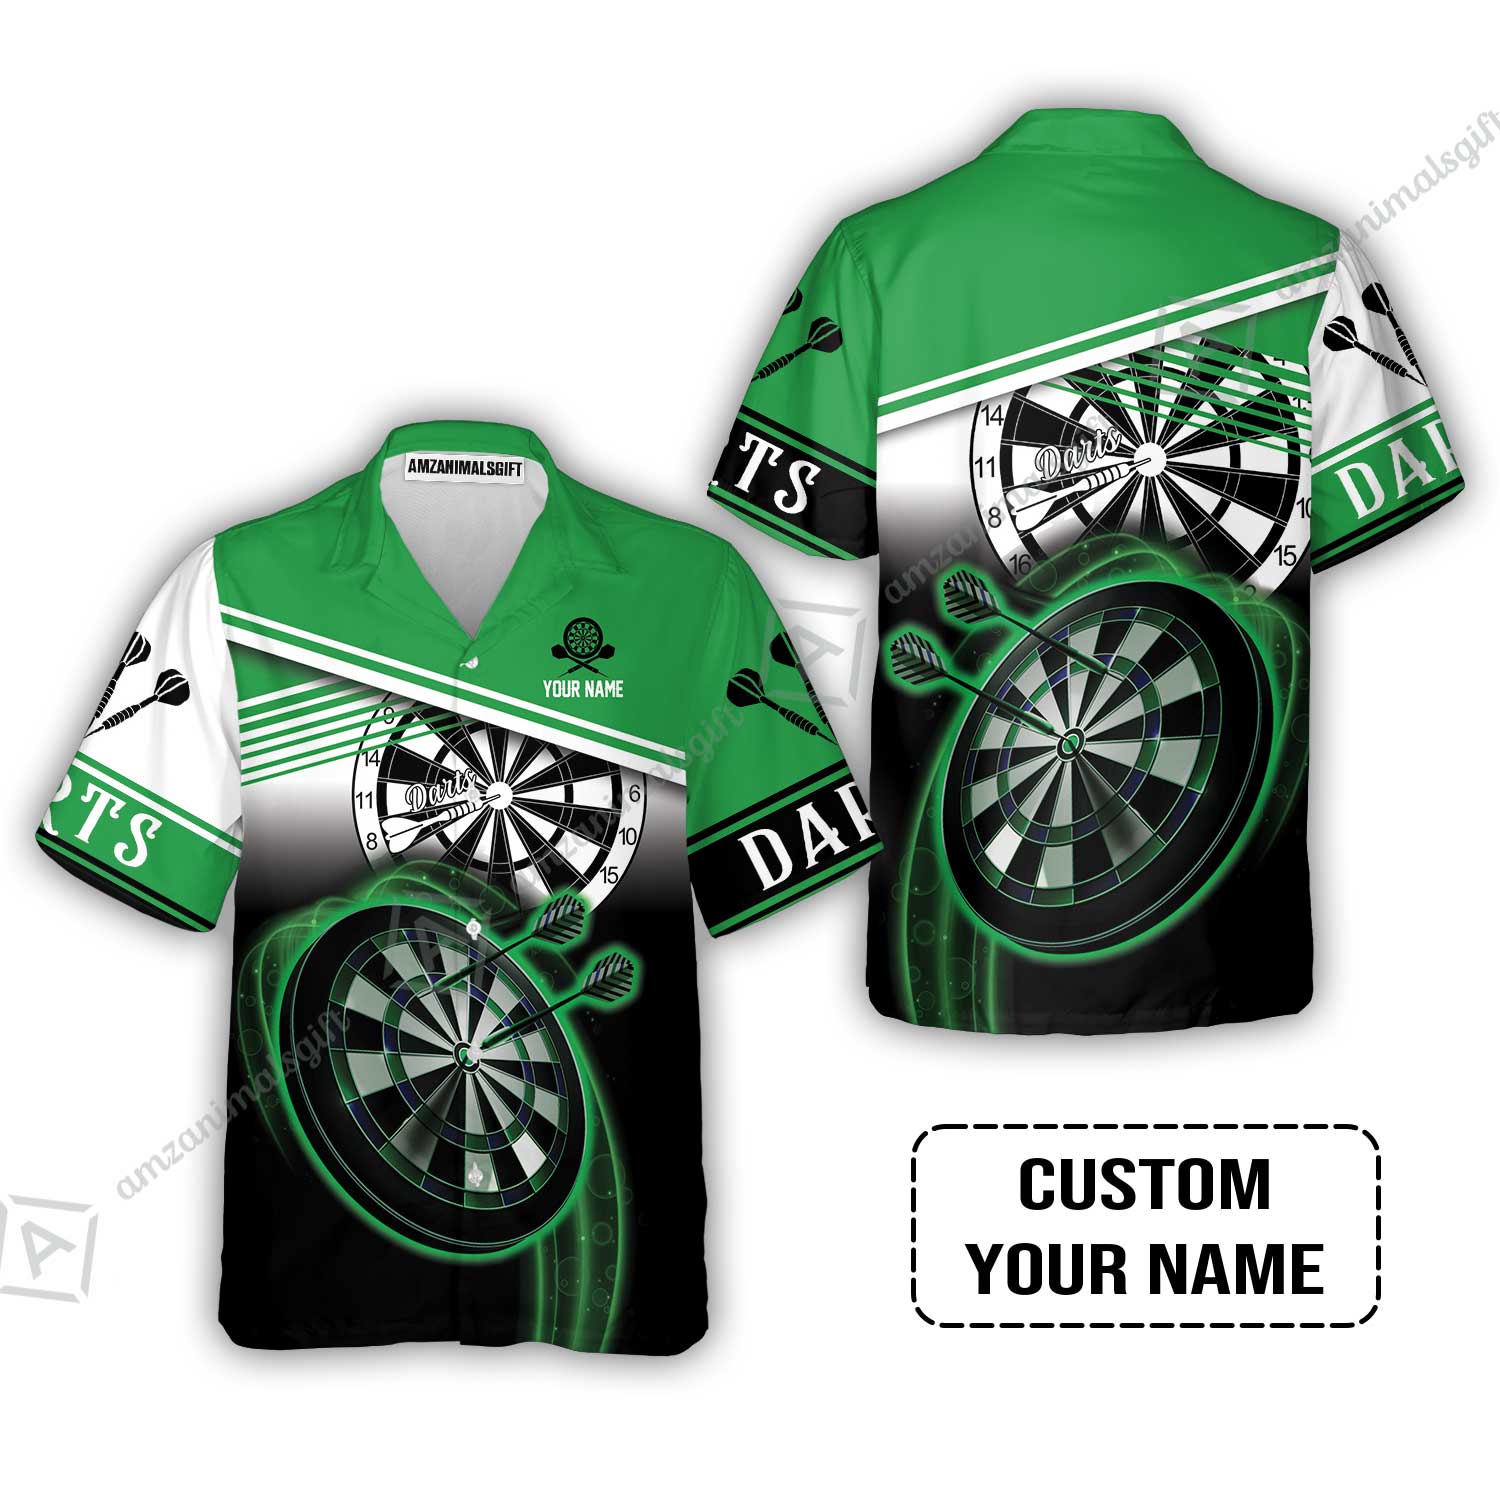 Customized Darts Hawaiian Shirt, Personalized Name Darts Hawaiian Shirt - Perfect Gift For Darts Lovers, Darts Players